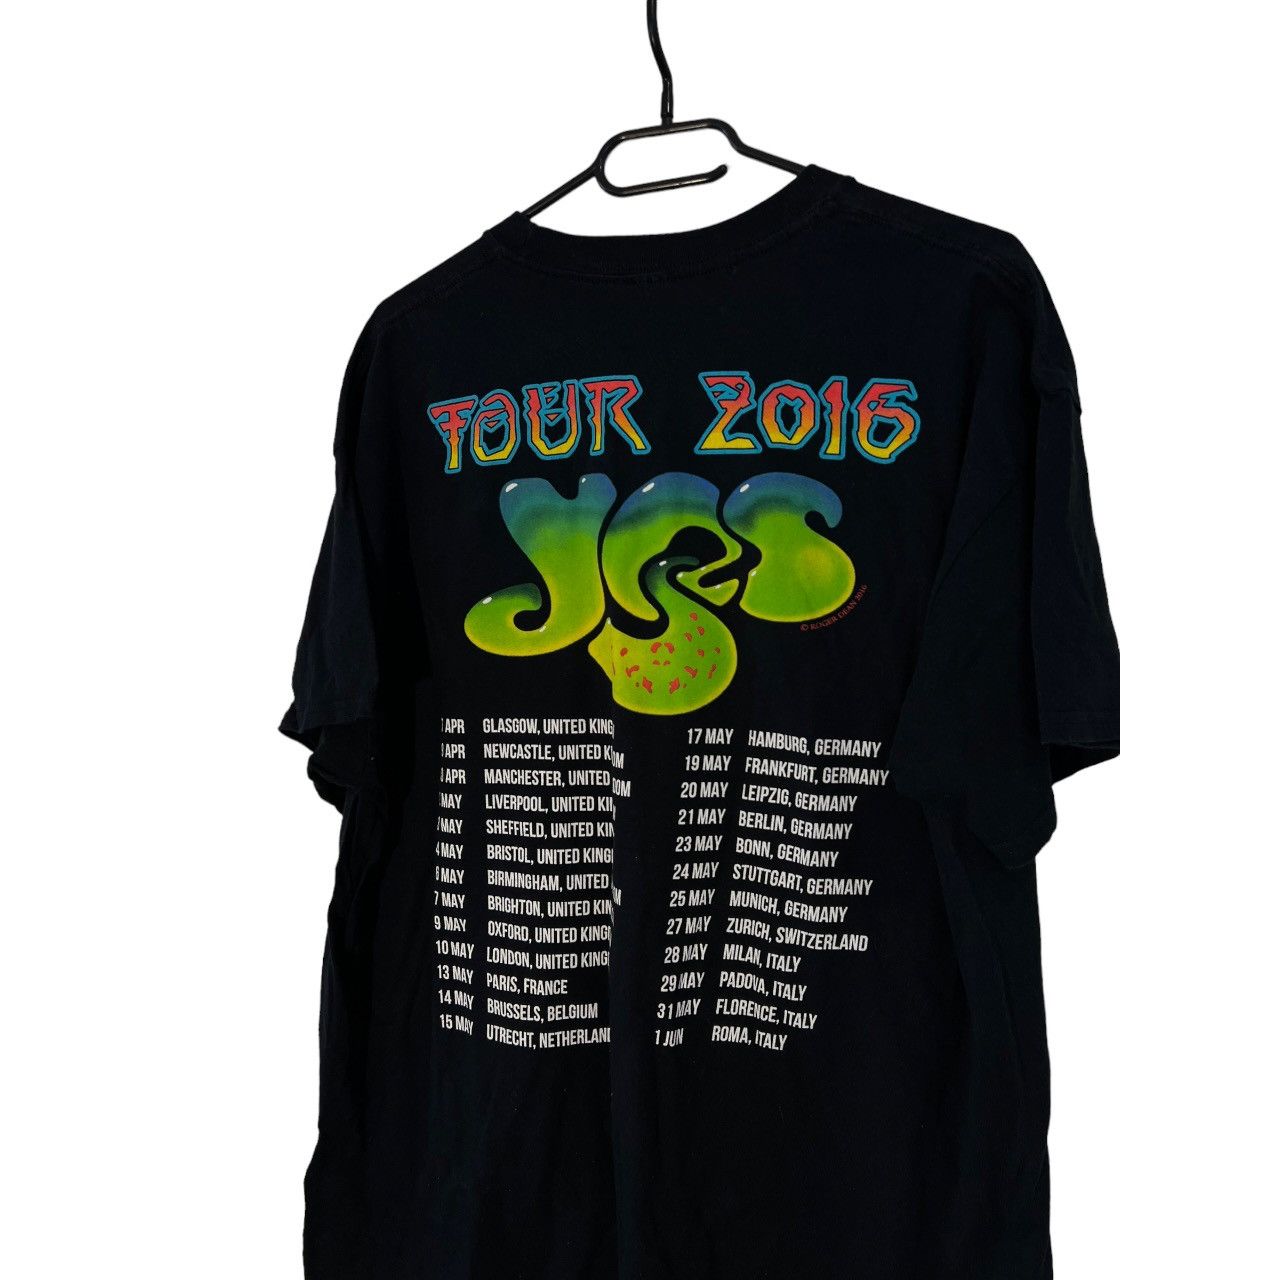 Vintage Roger dean tour 2016 t-shirt retro tee 90s black Size US M / EU 48-50 / 2 - 6 Thumbnail